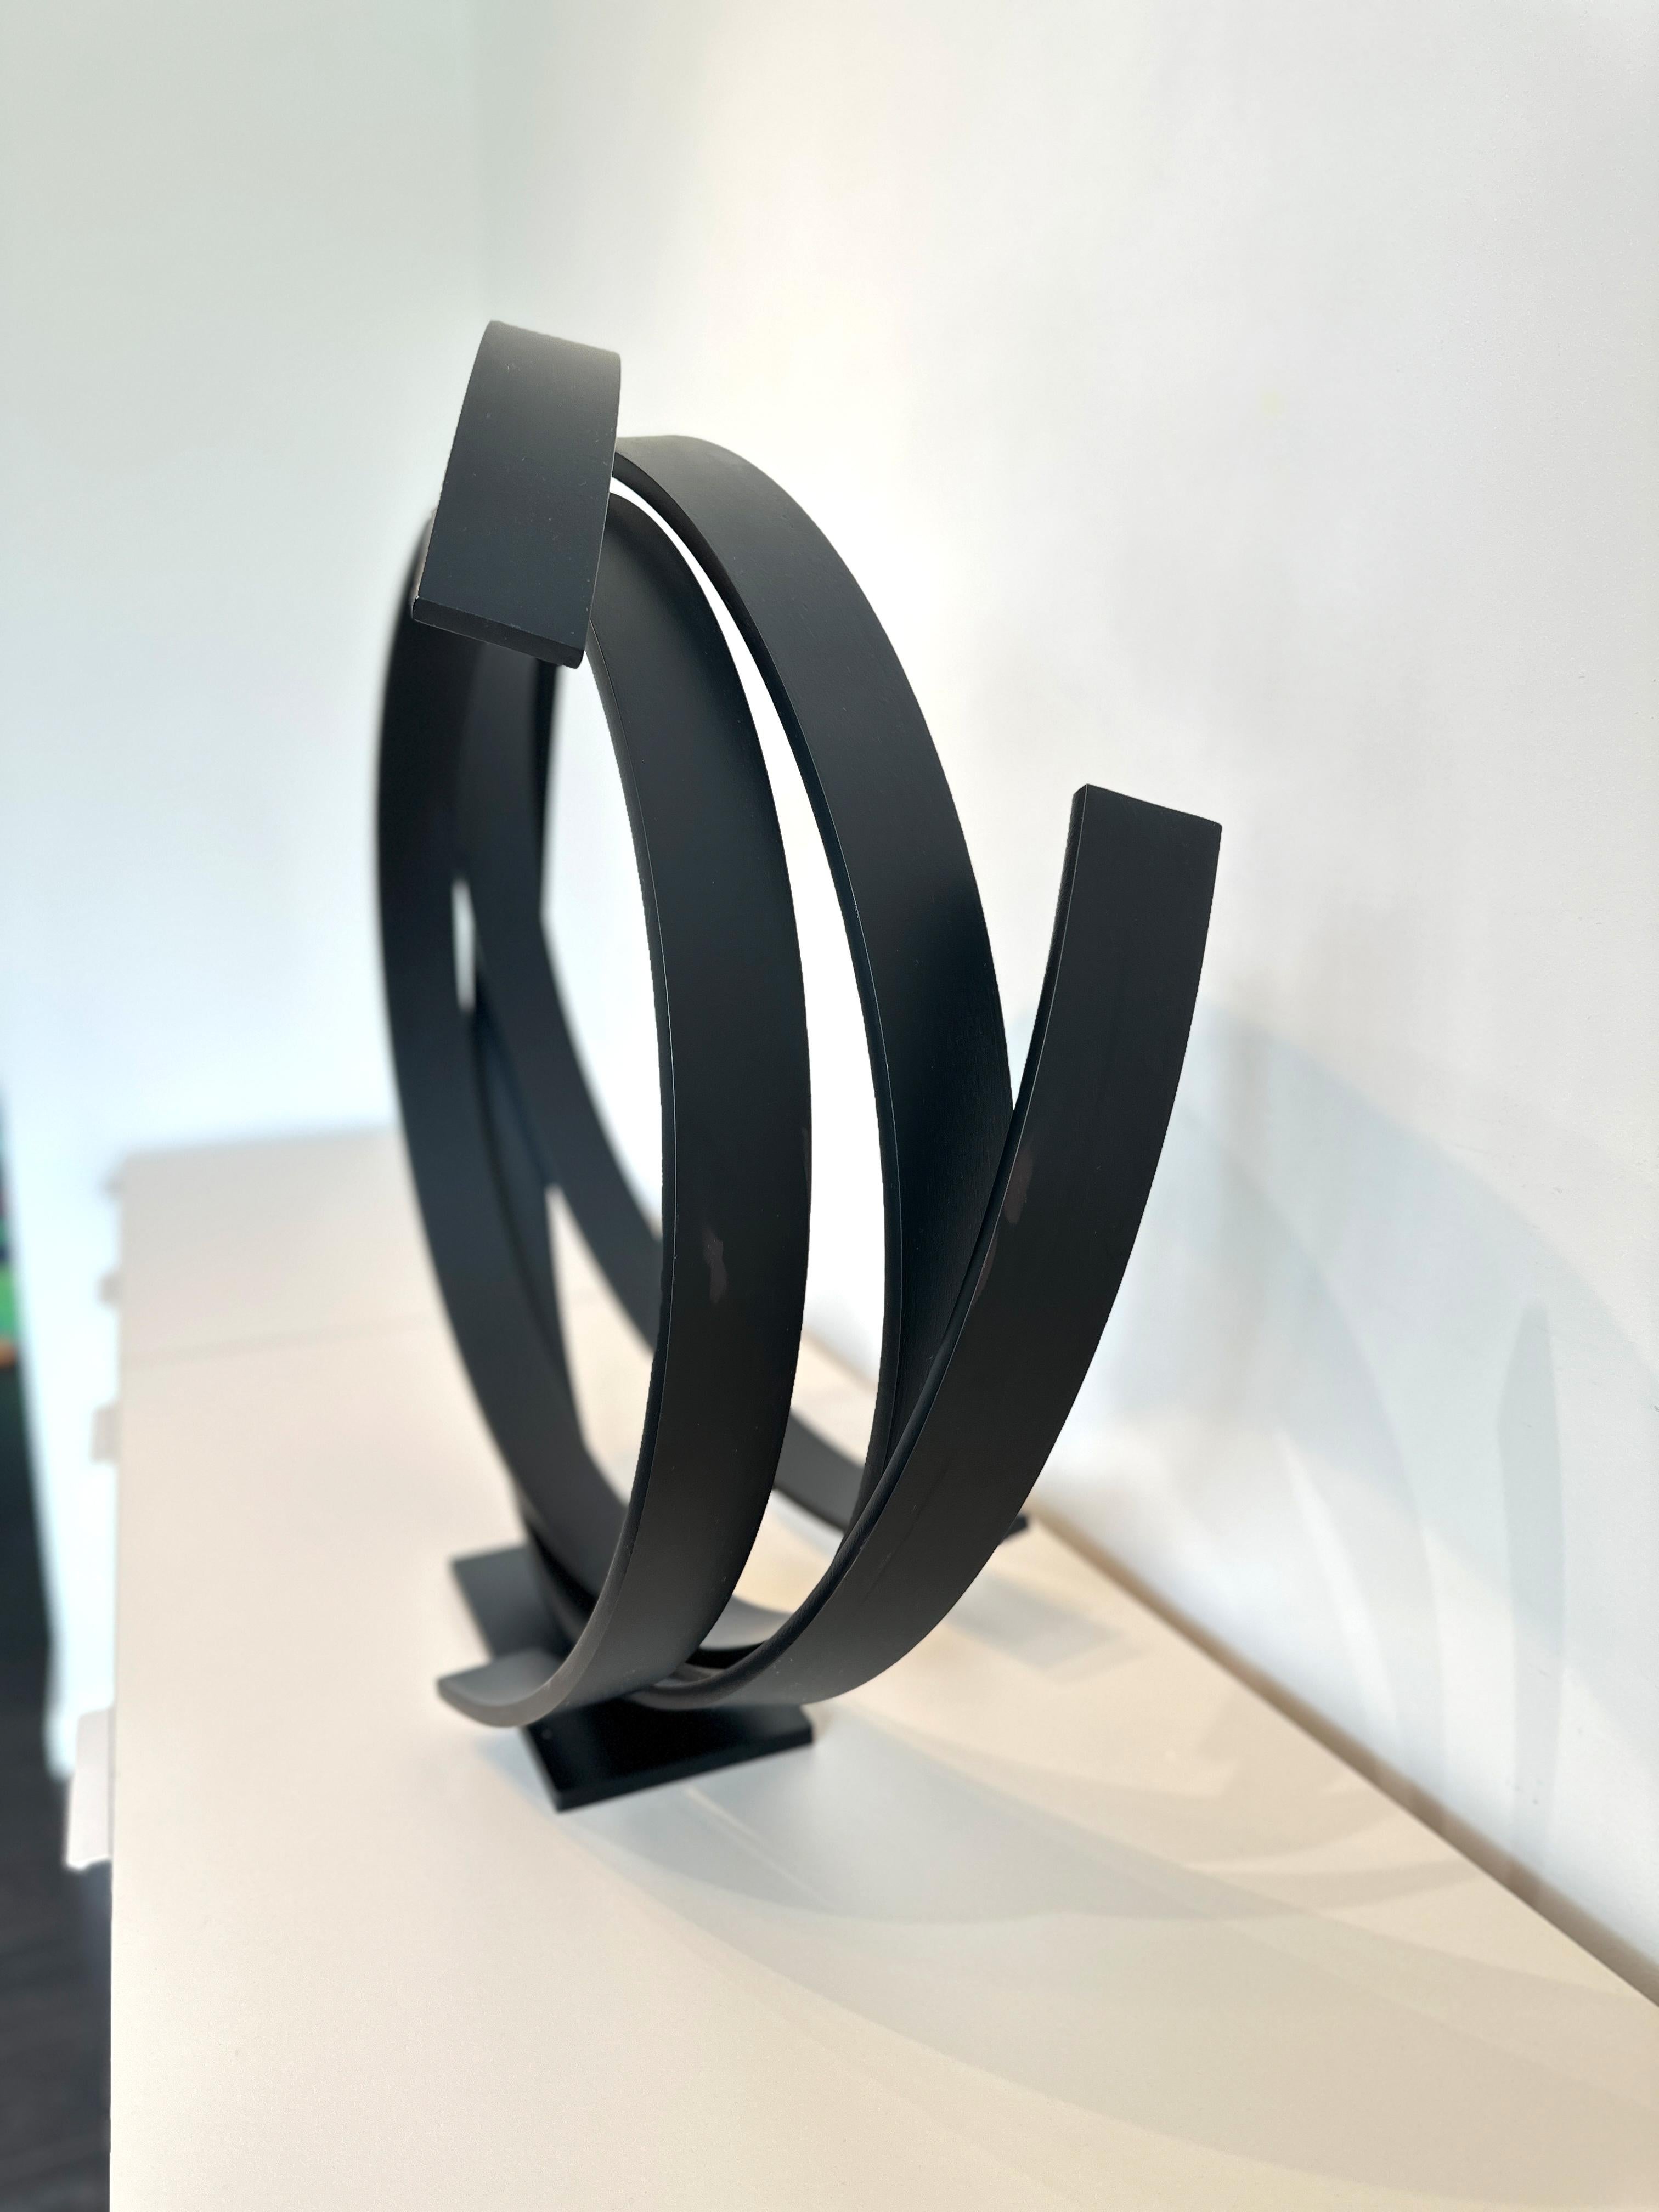 Black Orbit by Kuno Vollet - Large Contemporary Round Orbit sculpture  For Sale 6